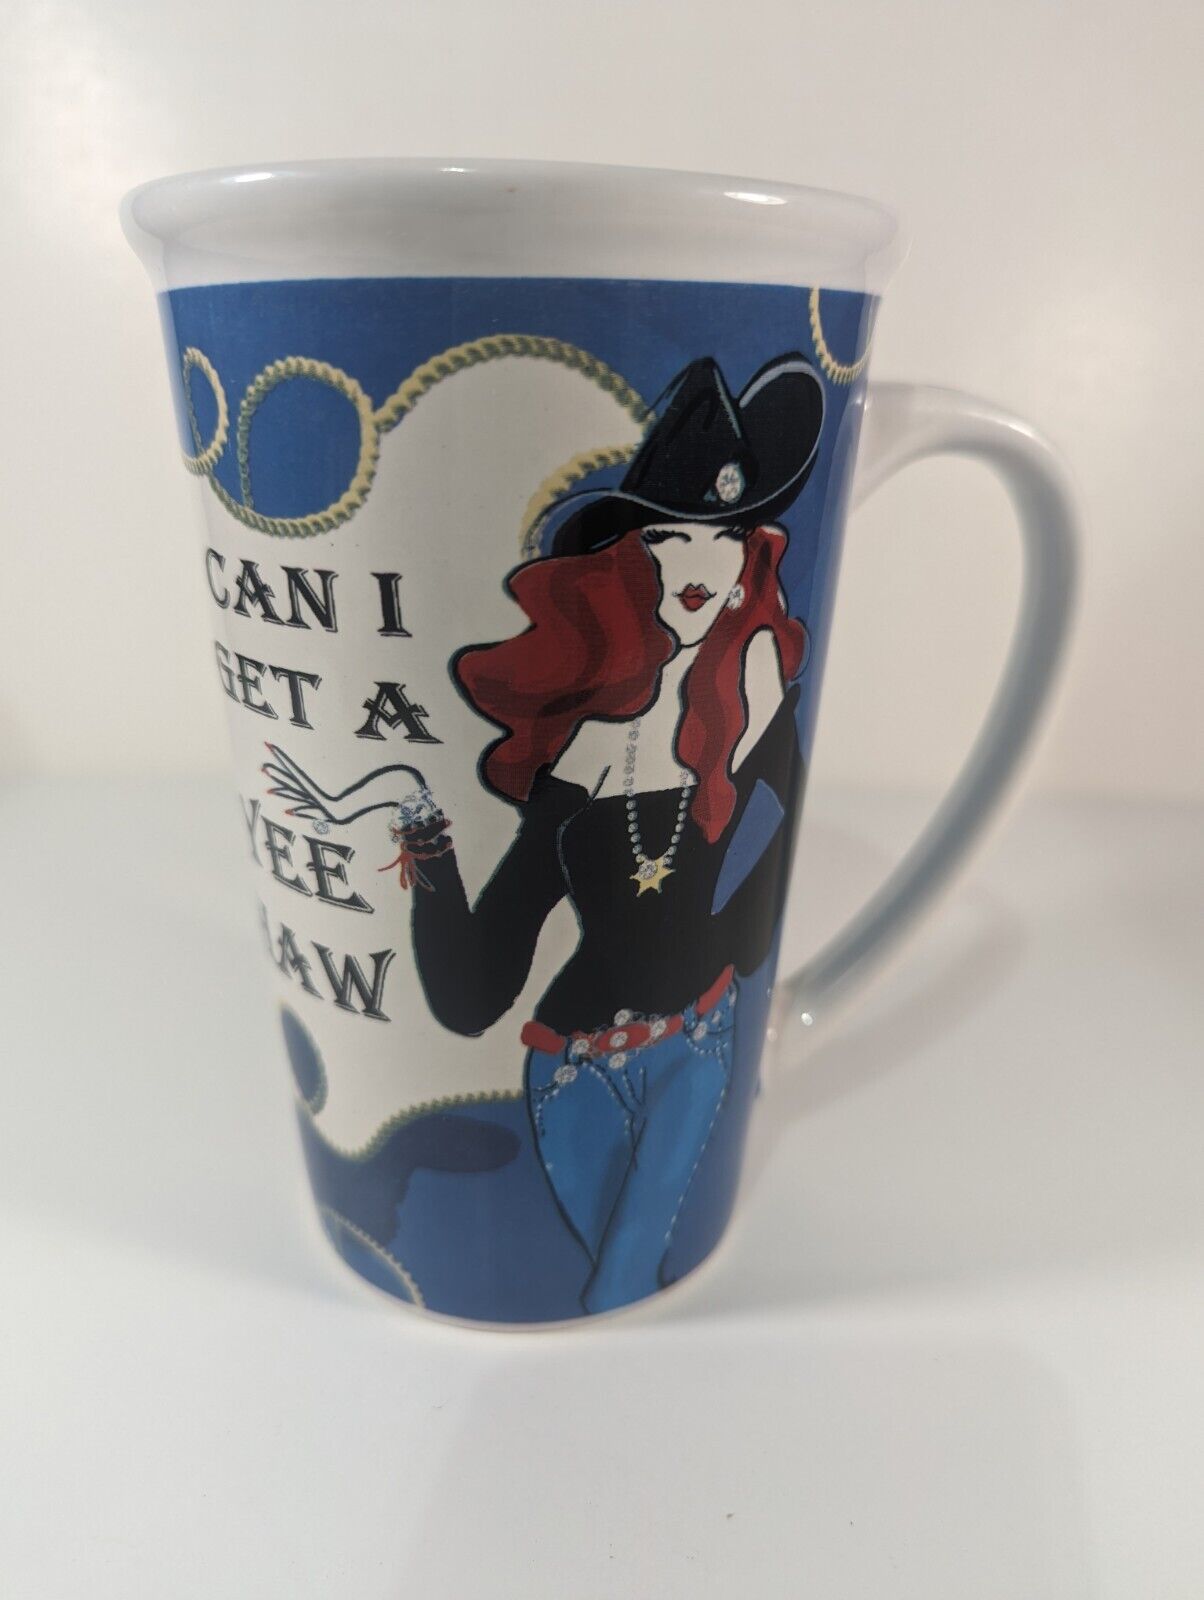 Can I Get a Yee Haw Tall Coffee Mug 20 oz - Working Girls Design - Cow Girl Cup